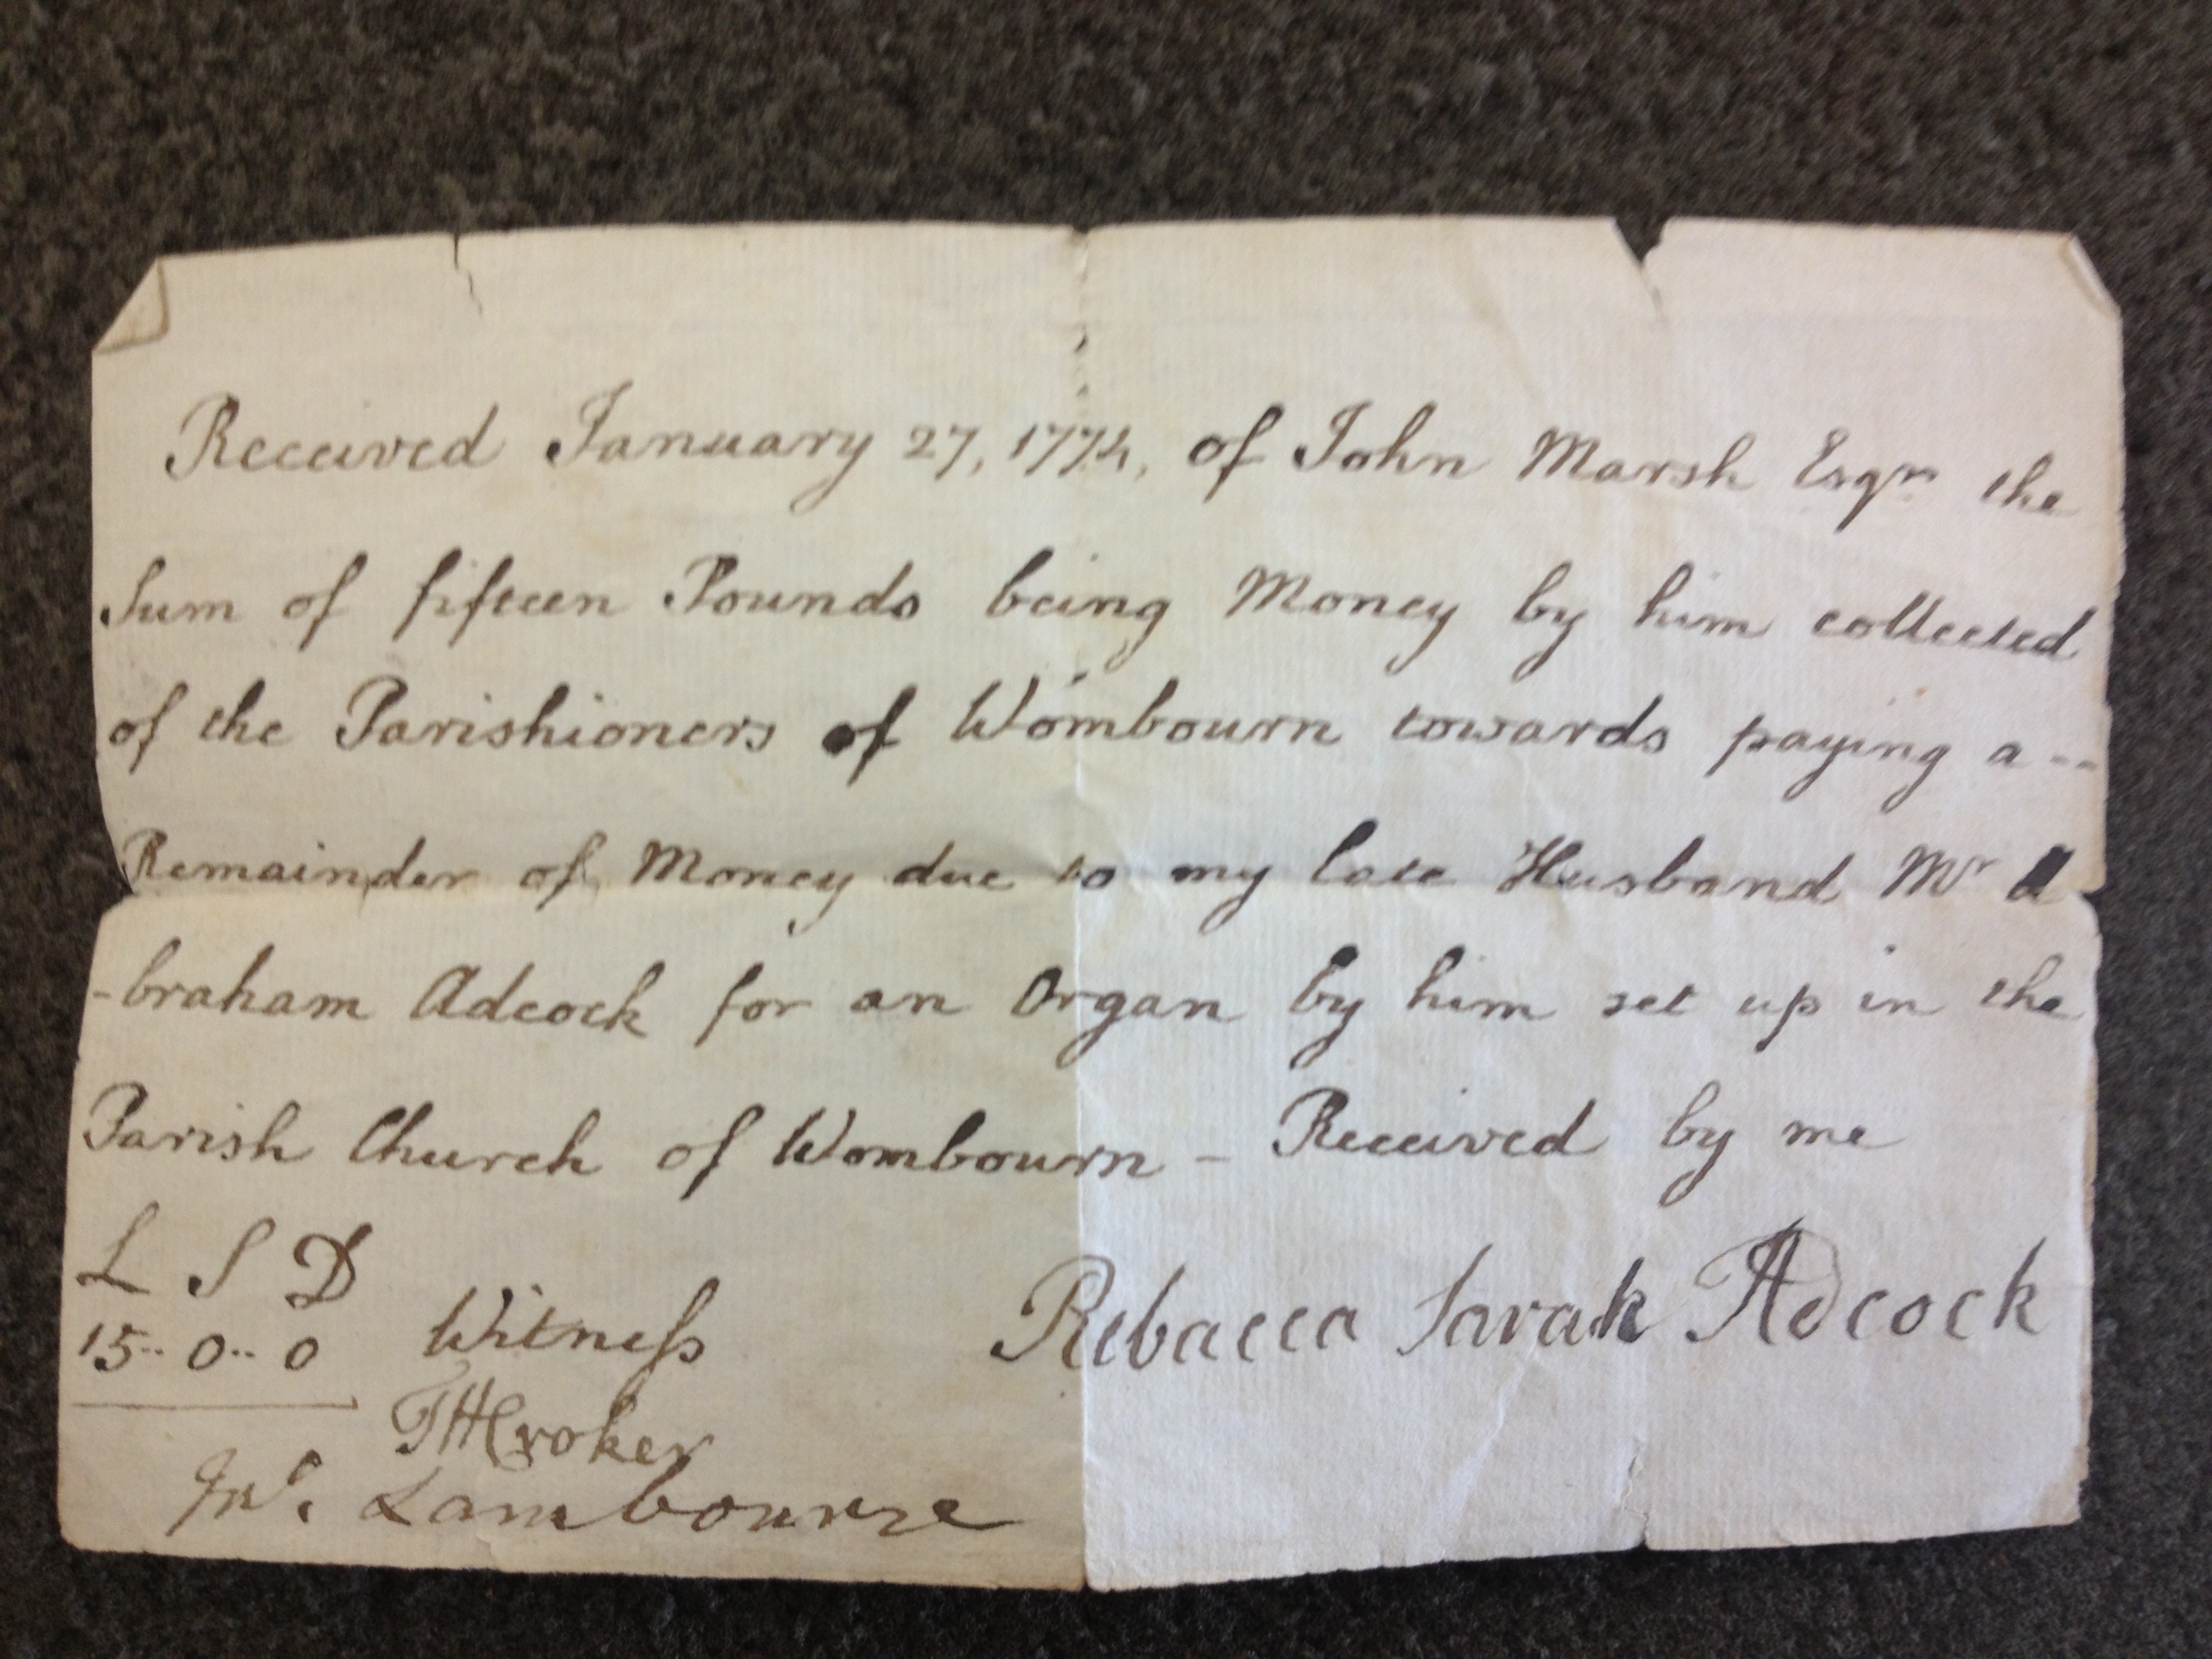 Rebecca Sarah Adcock to John Marsh. Receipt of payment for Wombourne Parish Church Organ, 27th January 1774.